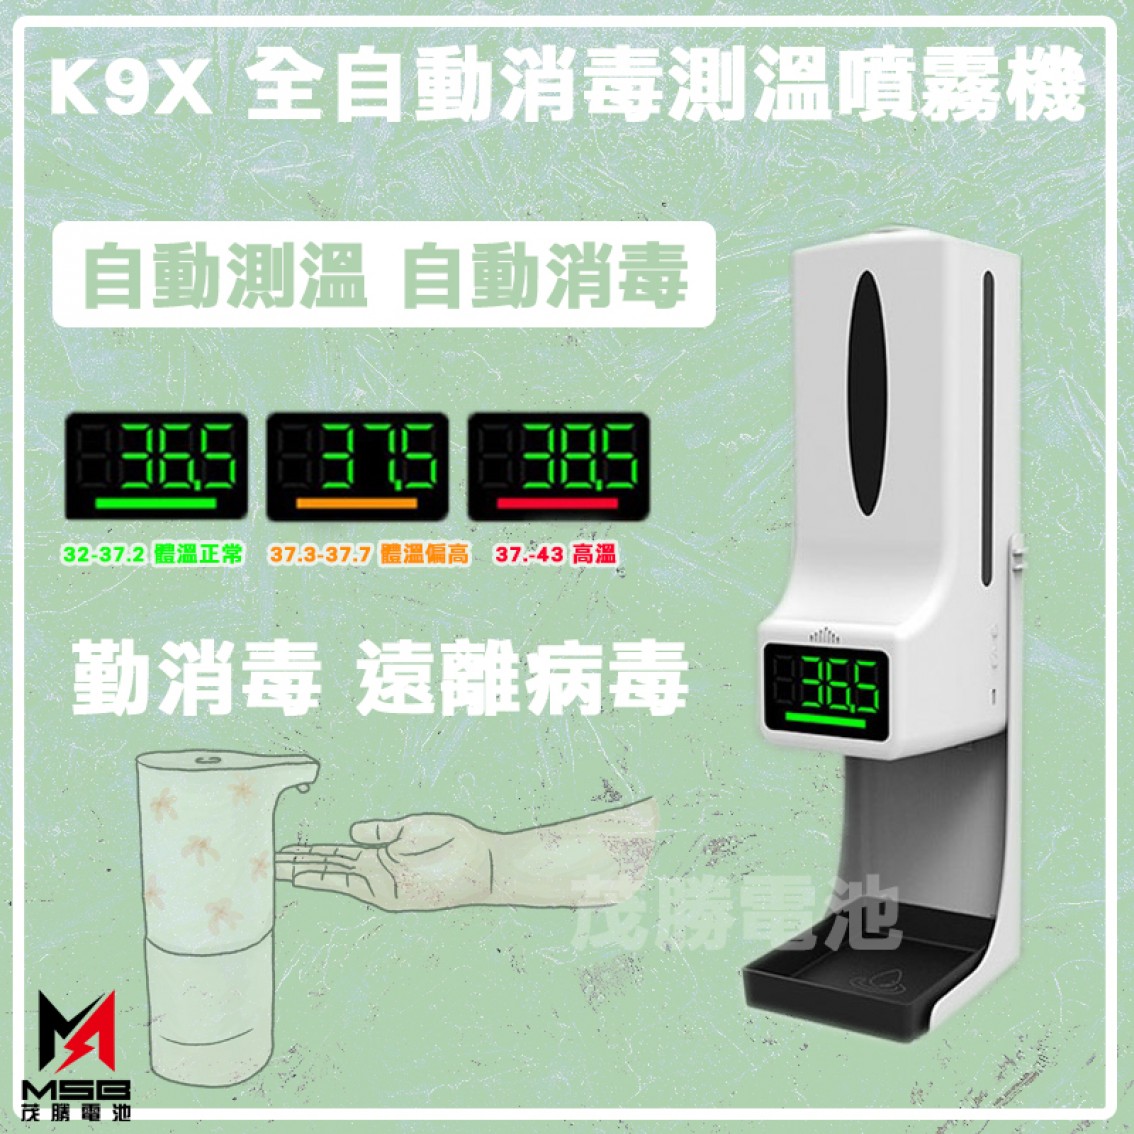 K9X 全自動消毒測溫噴霧機